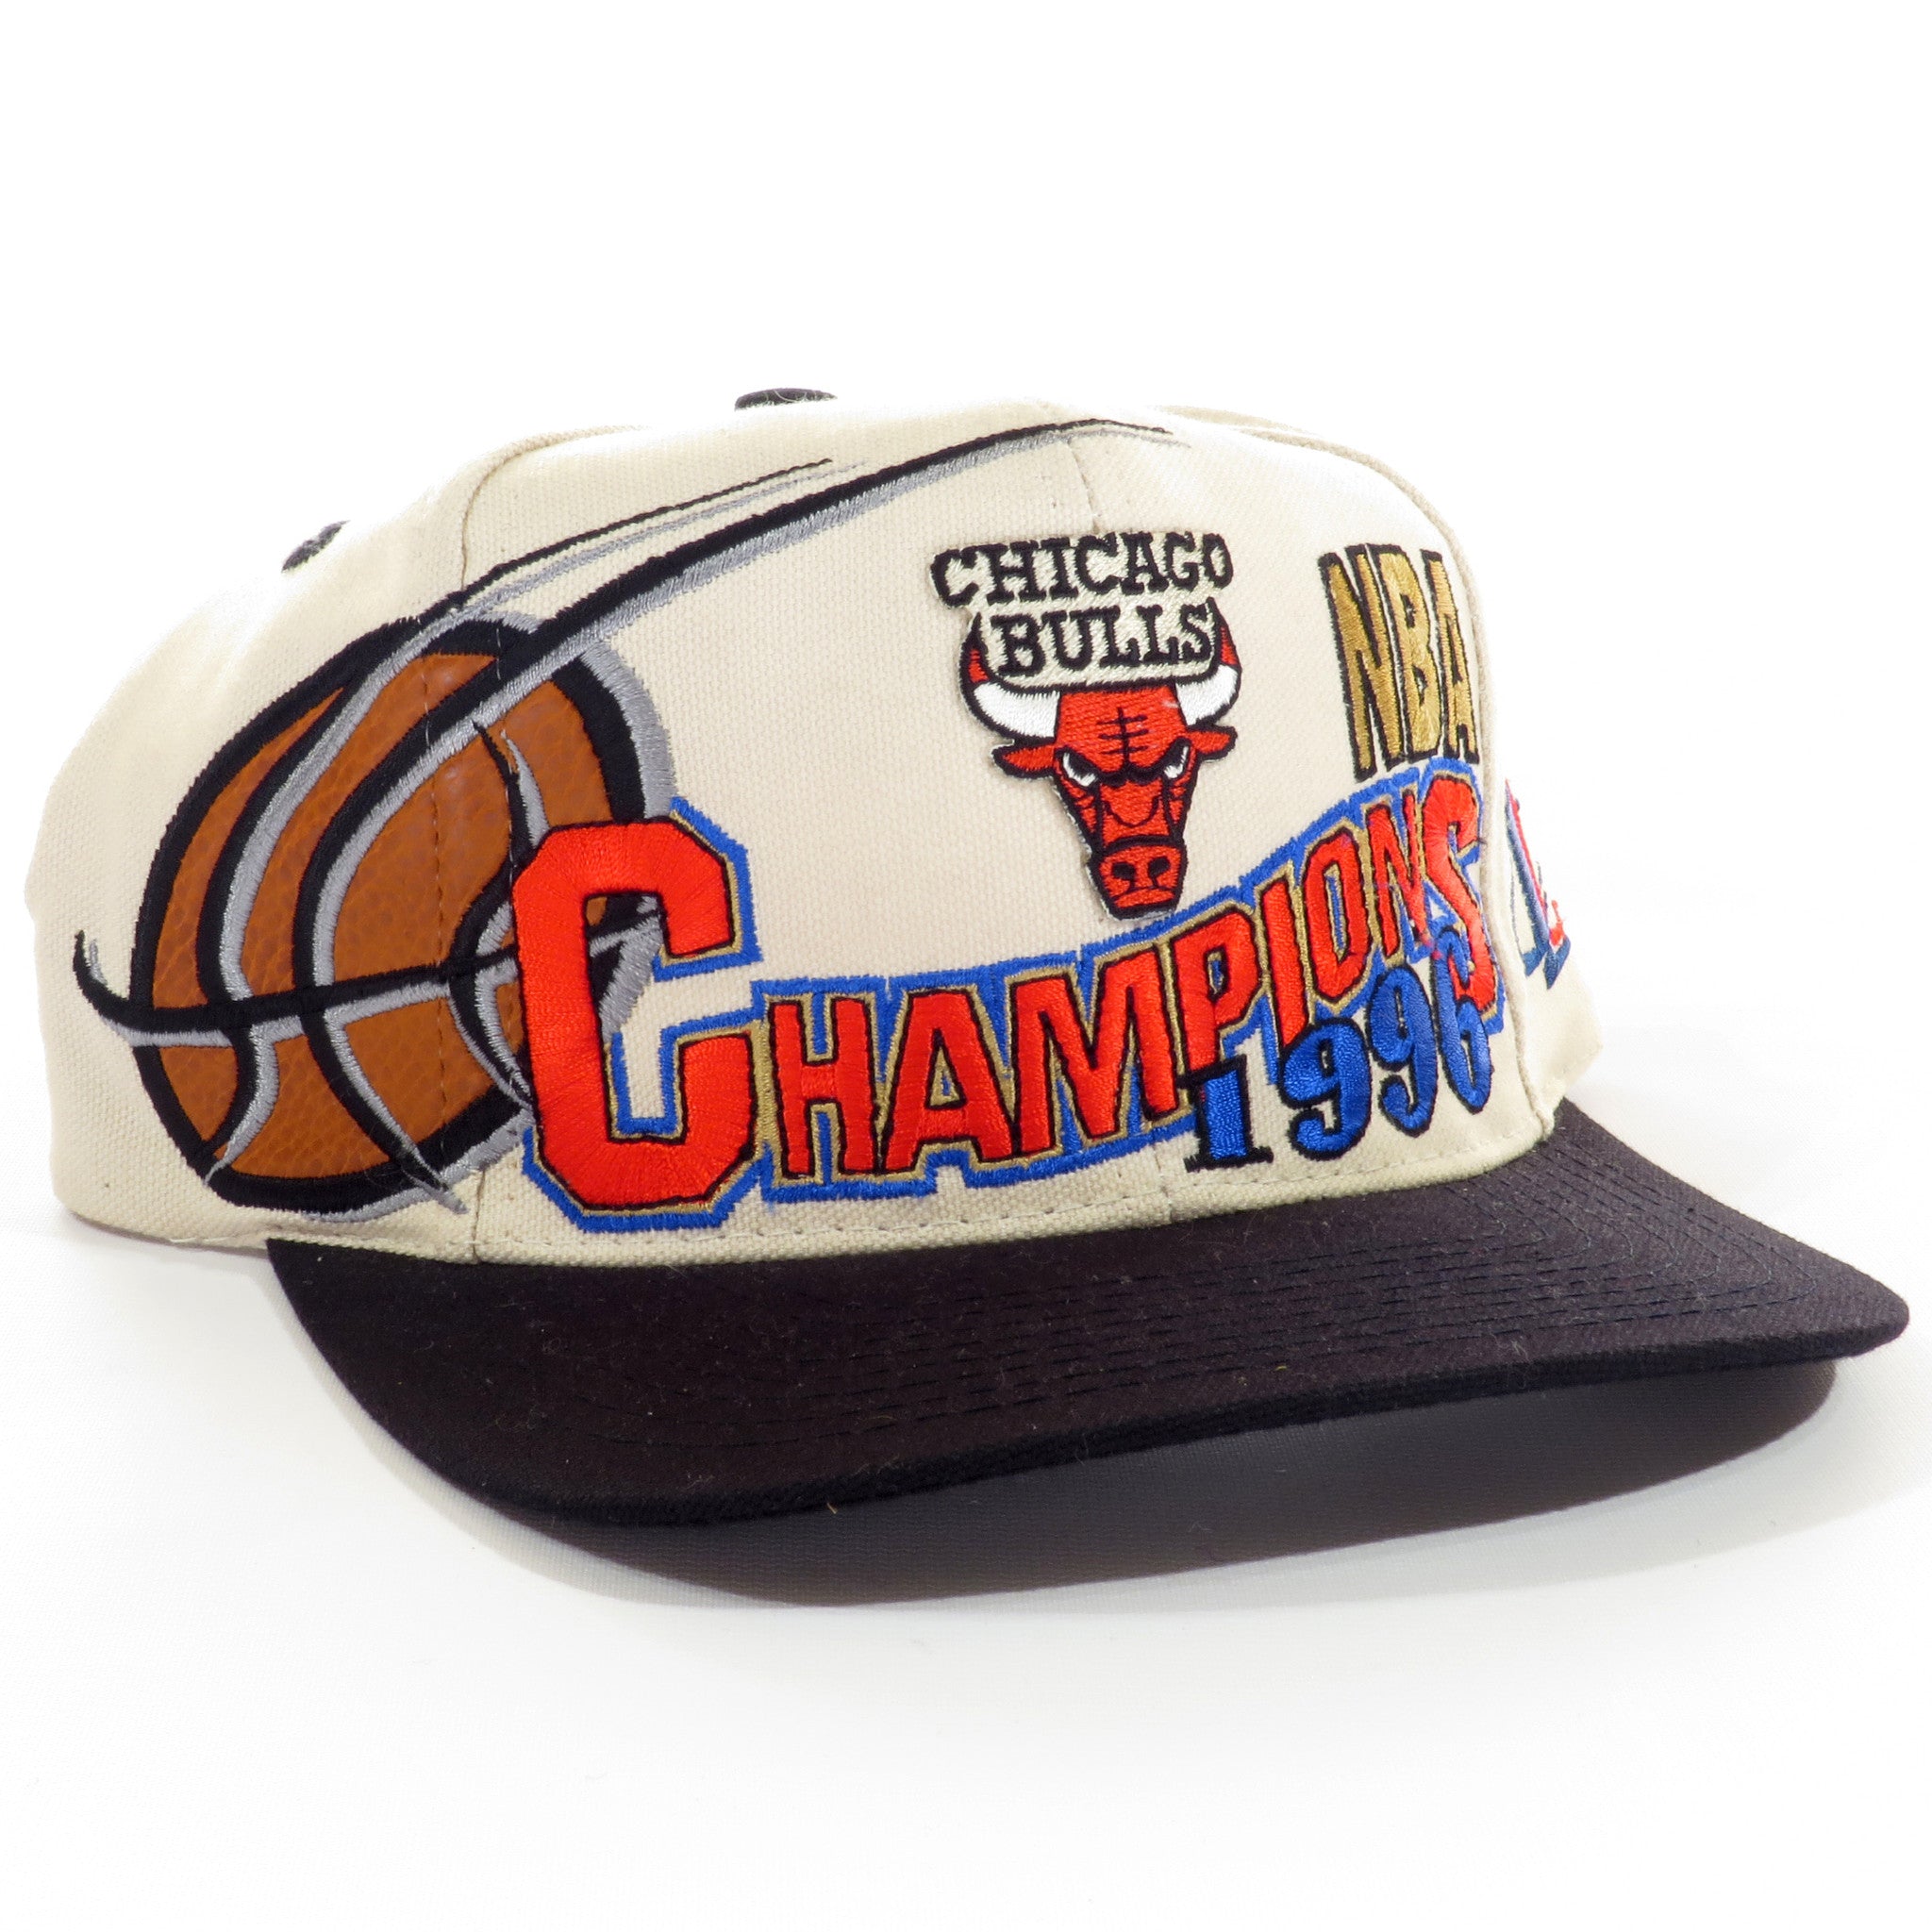 Chicago Bulls 1996 Champions 2-Tone Snapback Adjustable Cap